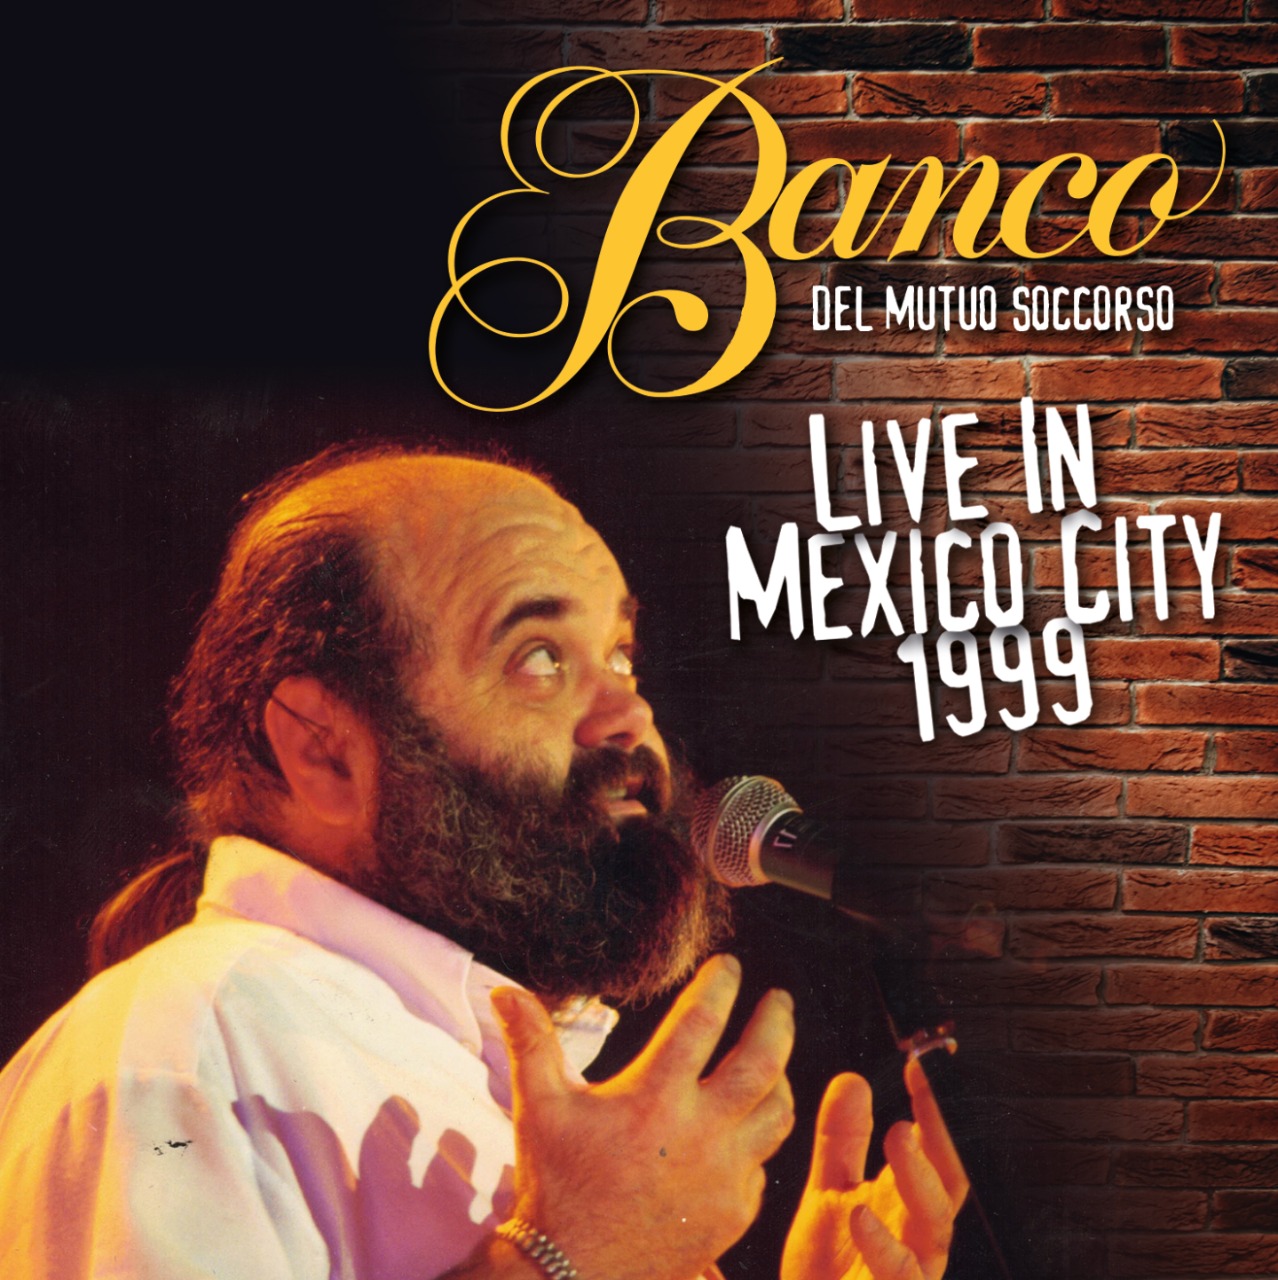 BANCO DEL MUTUO SOCCORSO - LIVE IN MÉXICO CITY 1999 (2cd) Remast